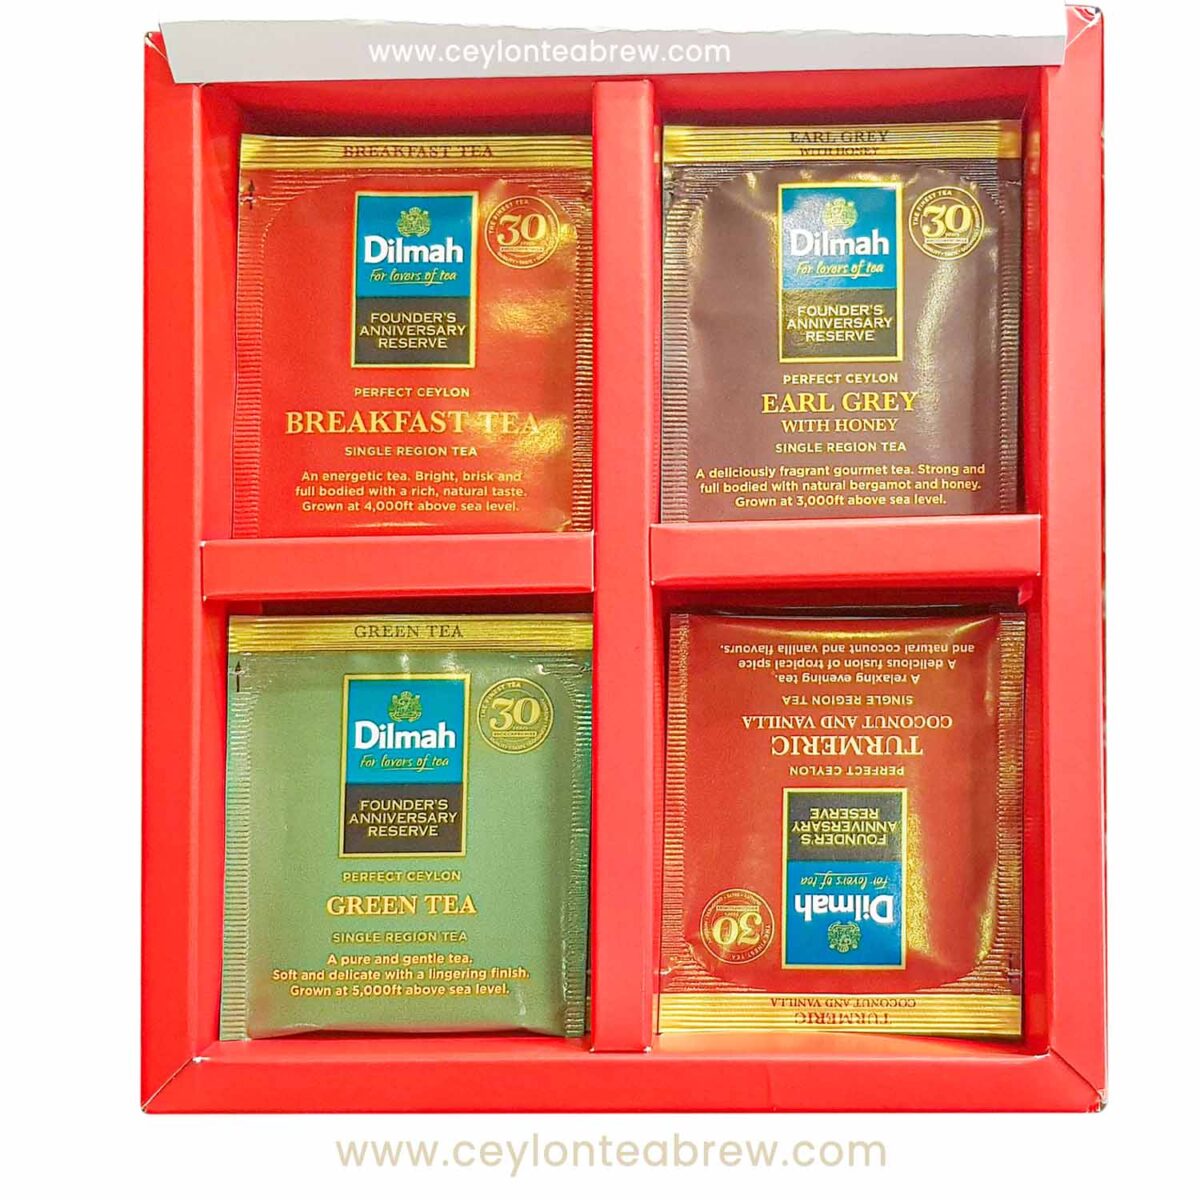 Dilmah gourmet black and green tea bags gift pack